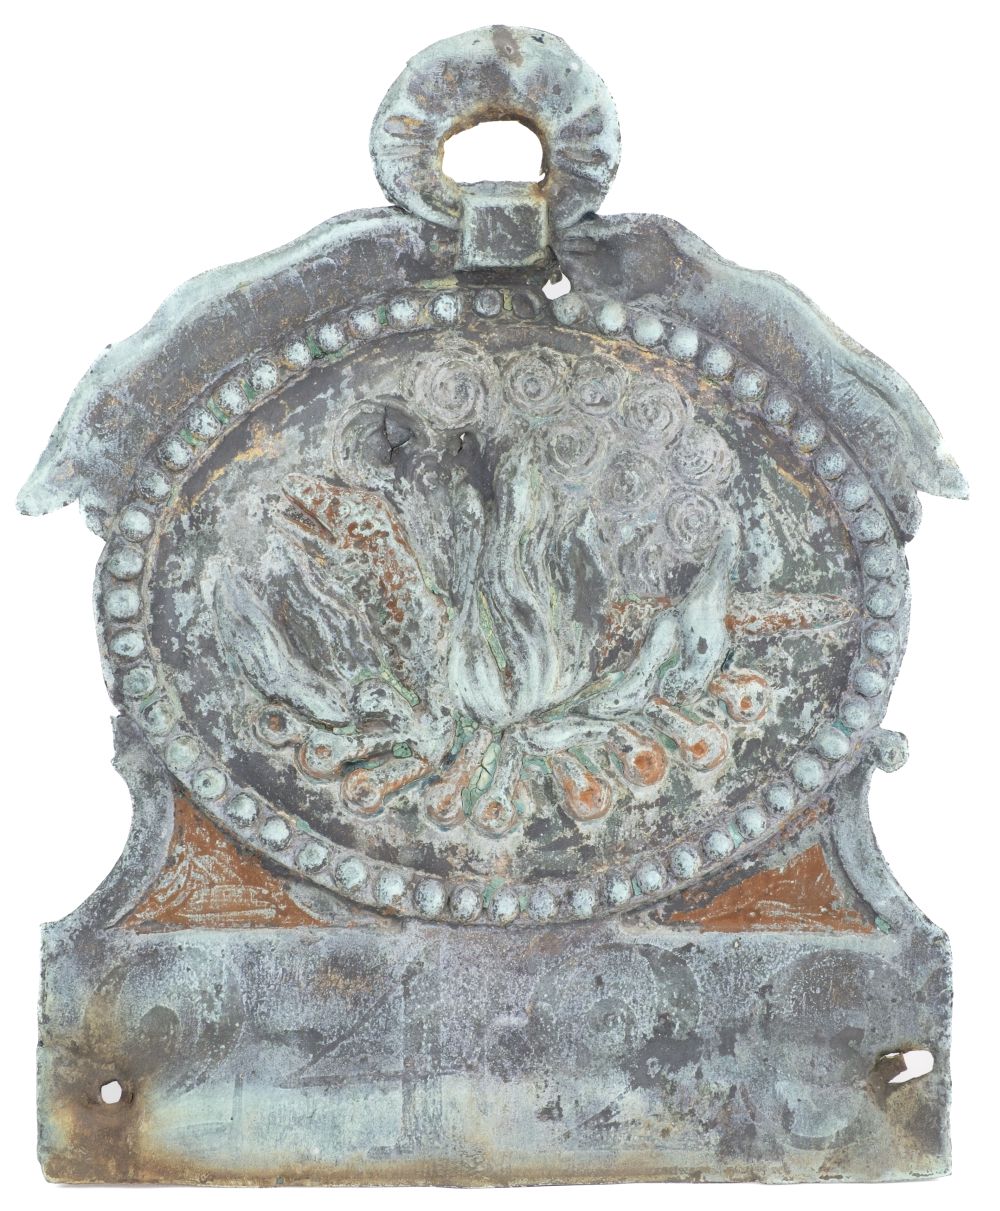 Fire Insurance Mark. A Regency copper 'Salamander' fire insurance mark circa 1825